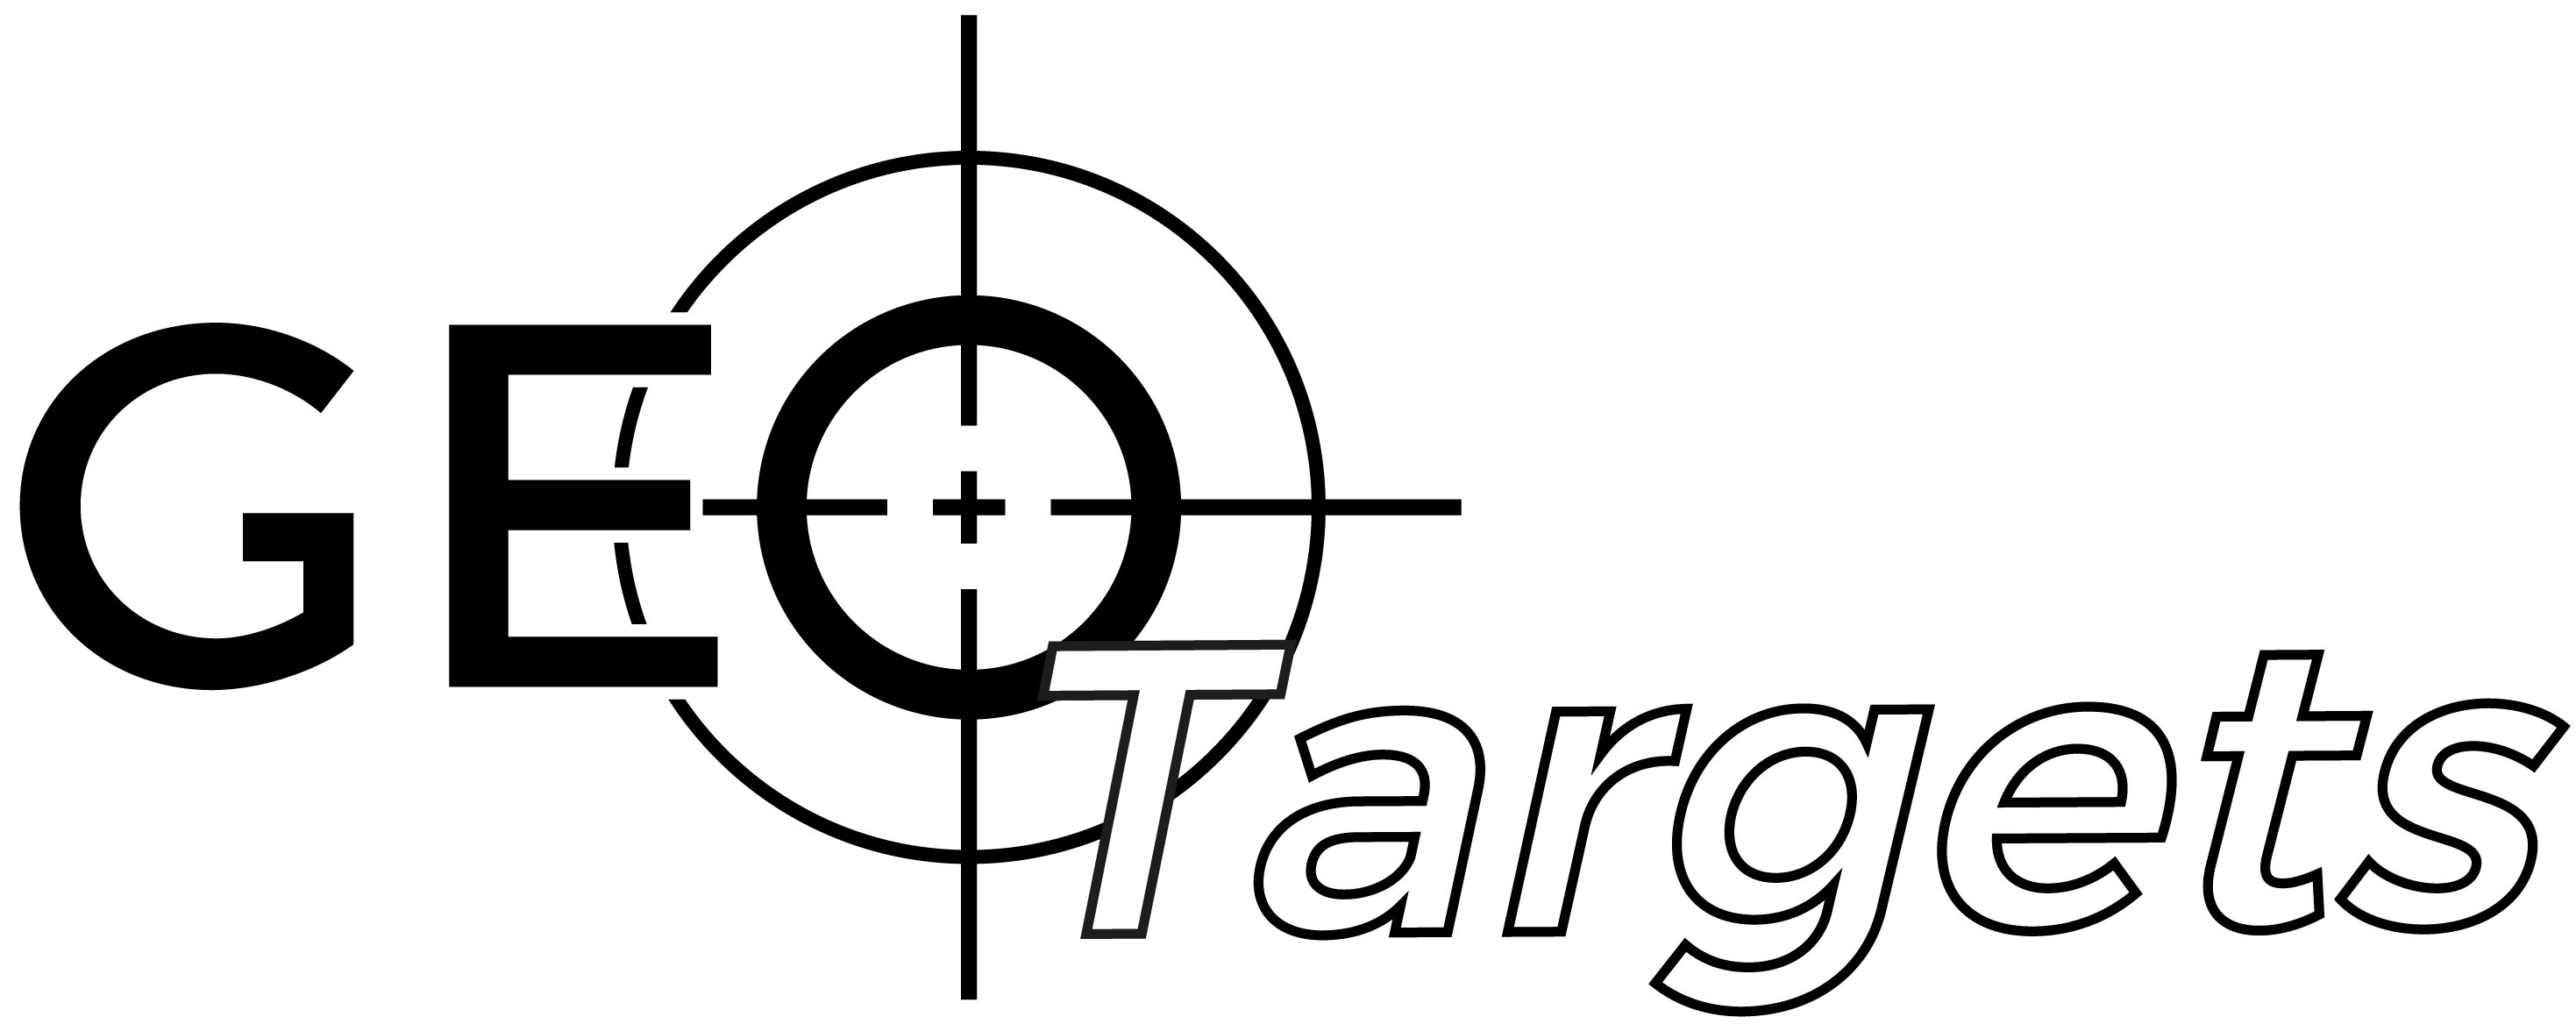 images/shoplogoimages/geo-targets-logo.jpg